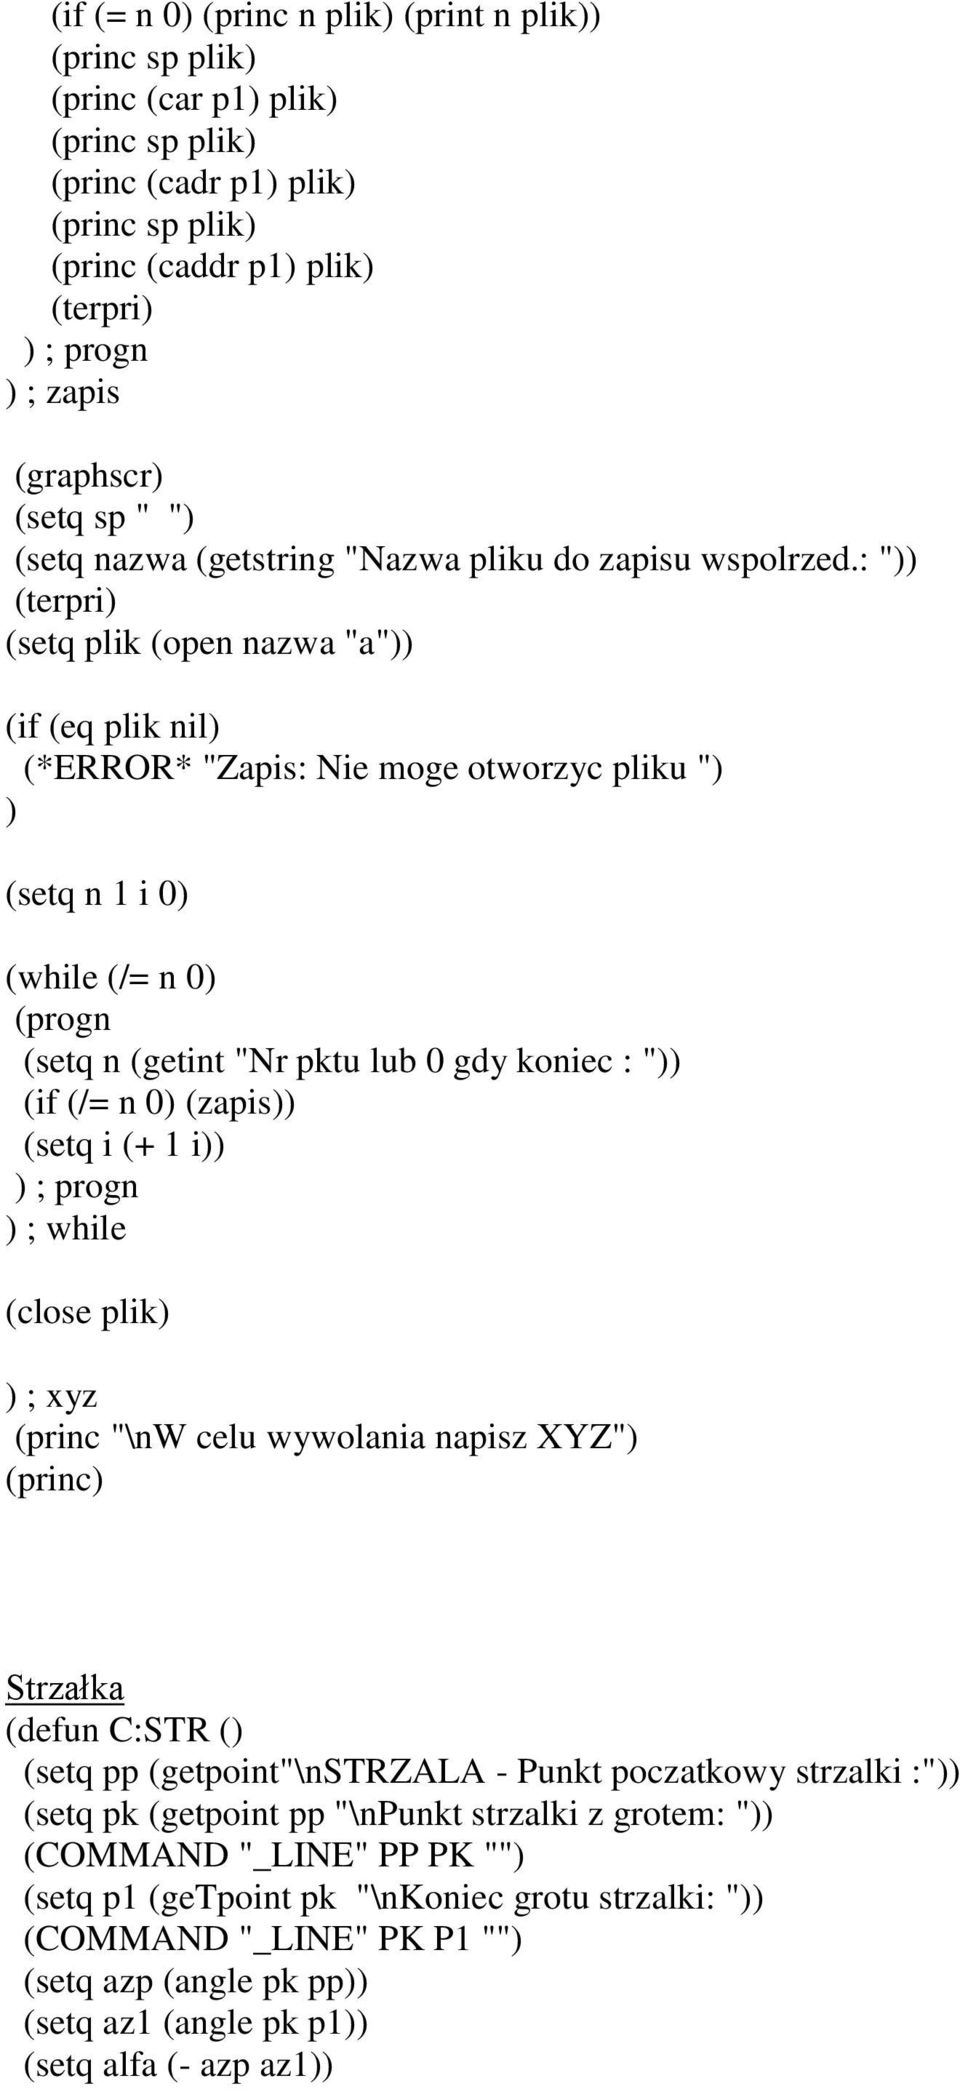 : " (terpri (setq plik (open nazwa "a" (if (eq plik nil (*ERROR* "Zapis: Nie moge otworzyc pliku " (setq n 1 i 0 (while (/= n 0 (progn (setq n (getint "Nr pktu lub 0 gdy koniec : " (if (/= n 0 (zapis